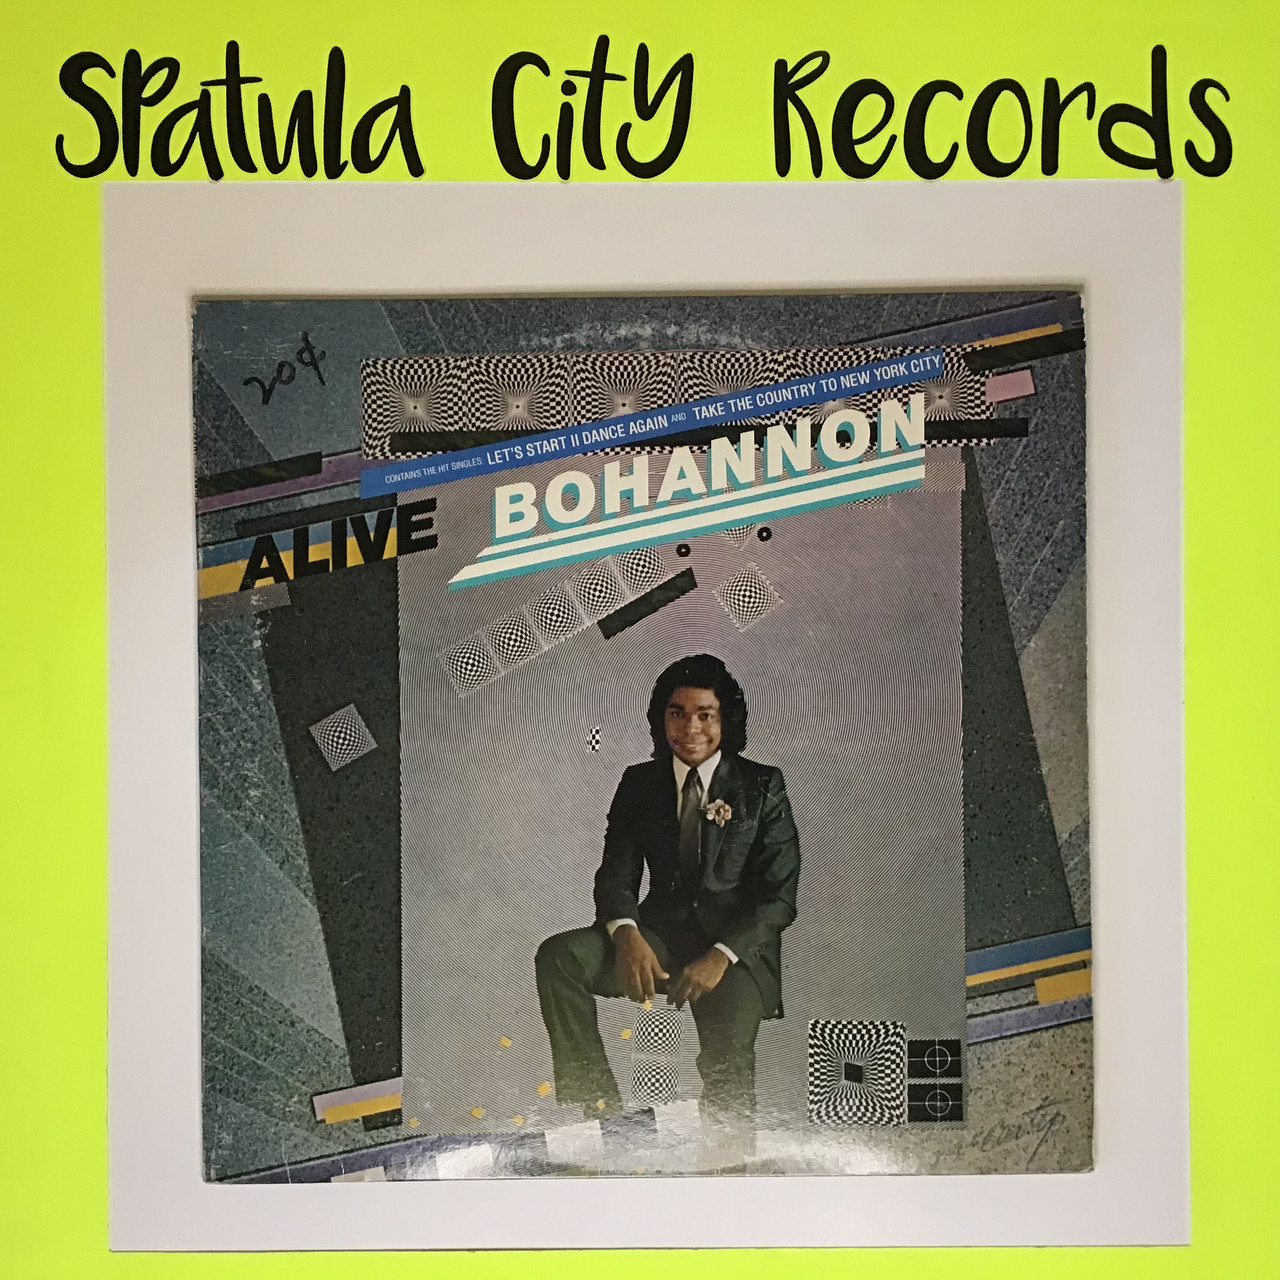 Bohannon - Alive - vinyl record LP